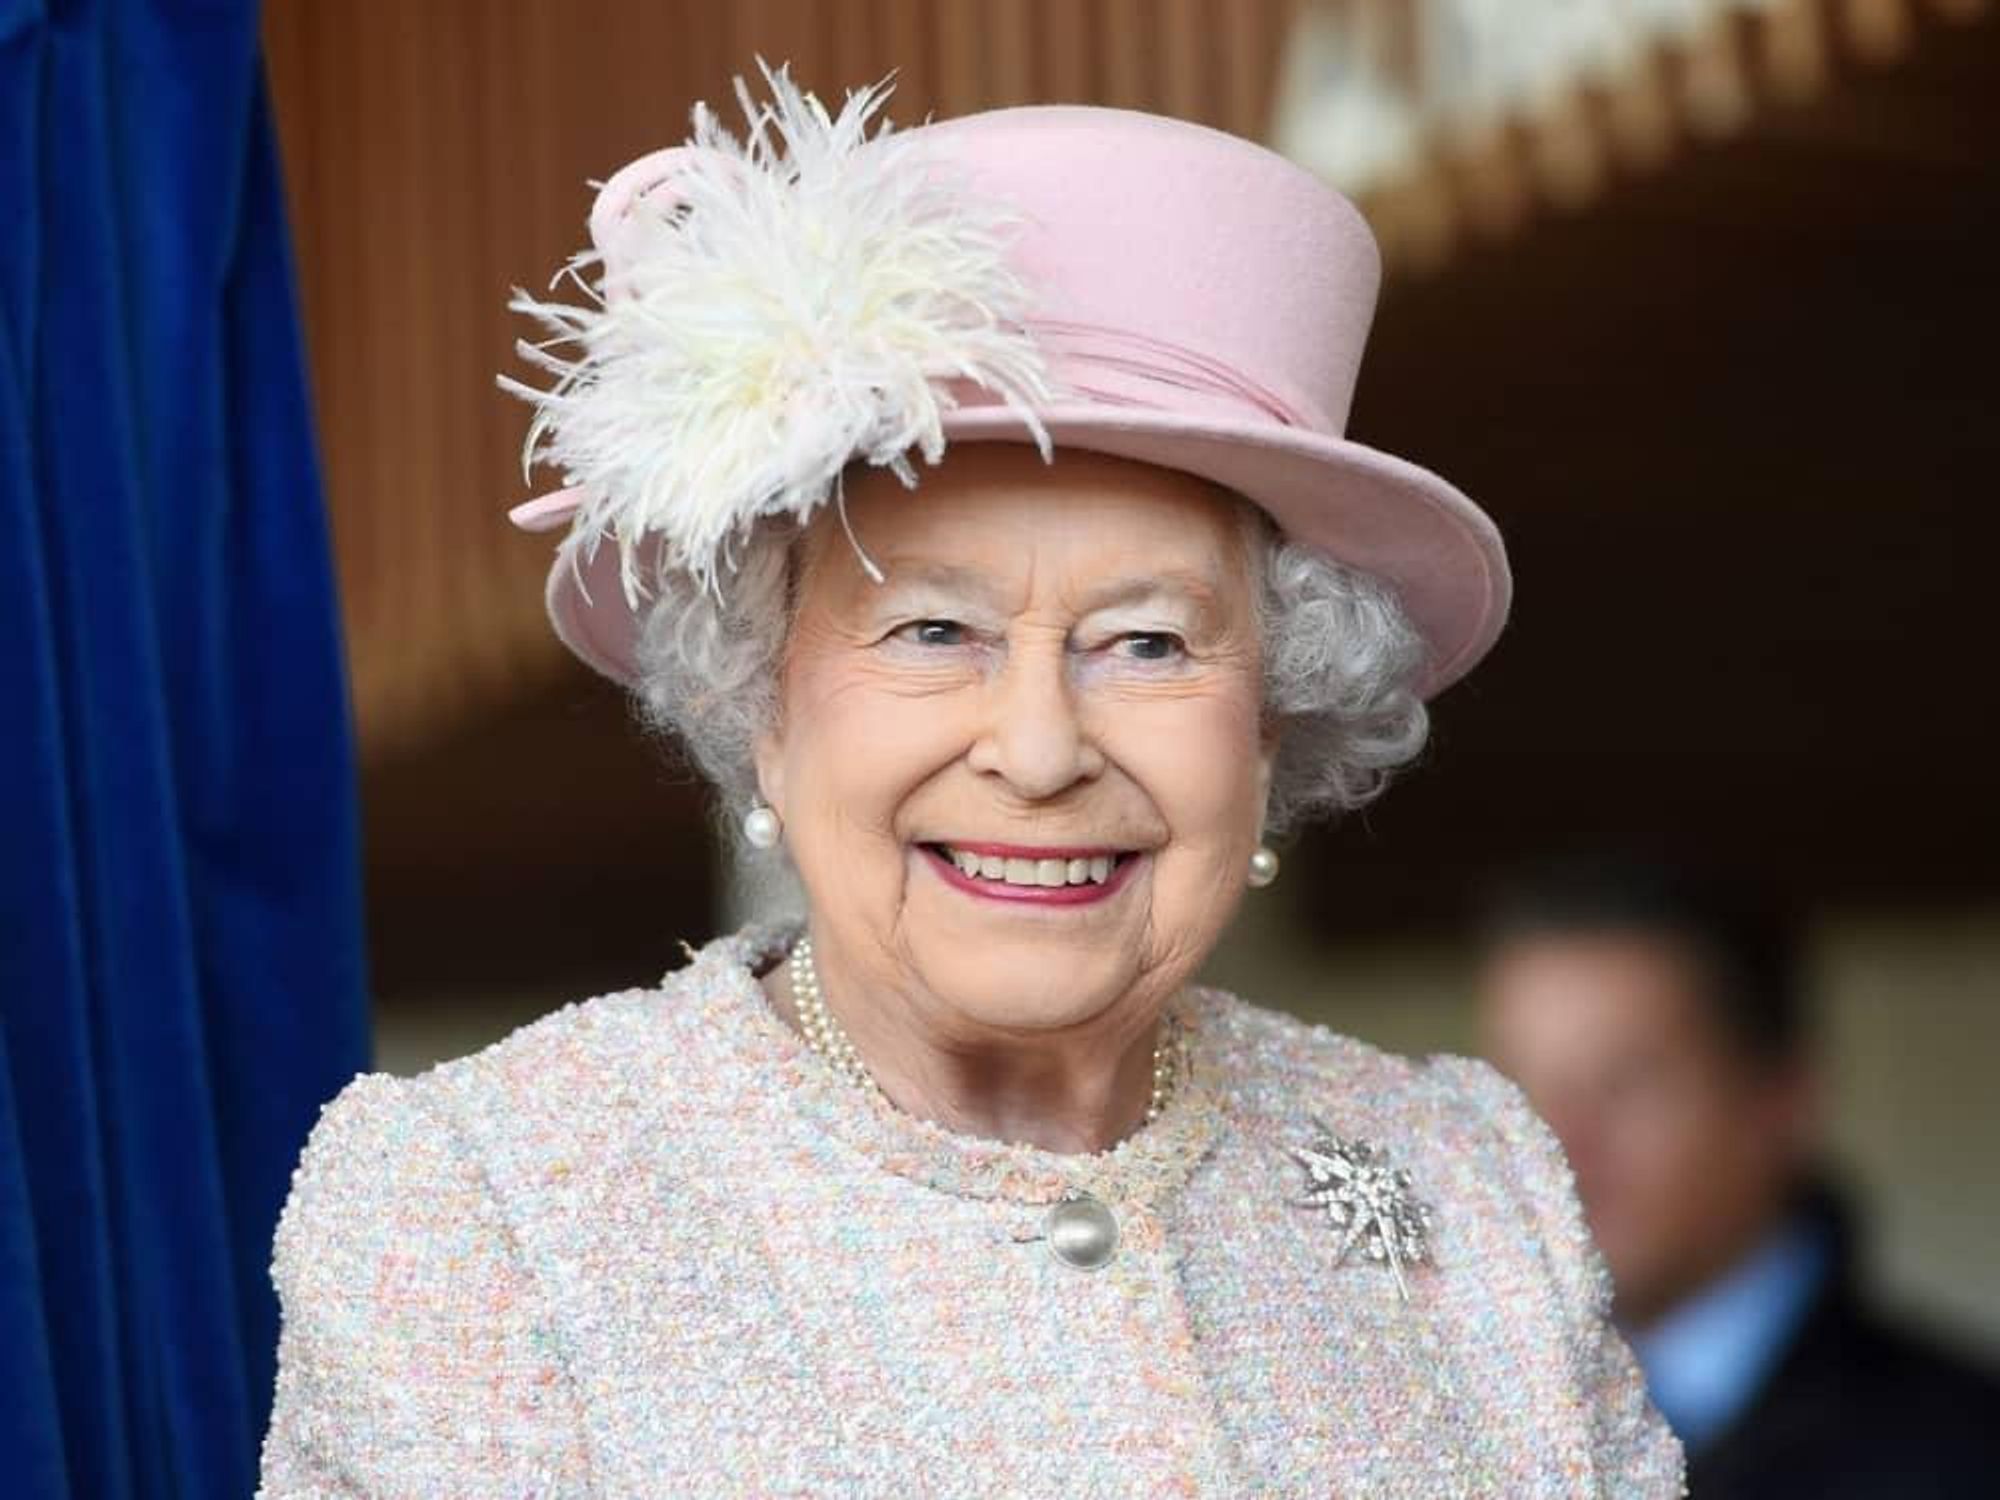 Dallas Queen Elizabeth II, of longtime idols, who has died at 96 CultureMap Dallas